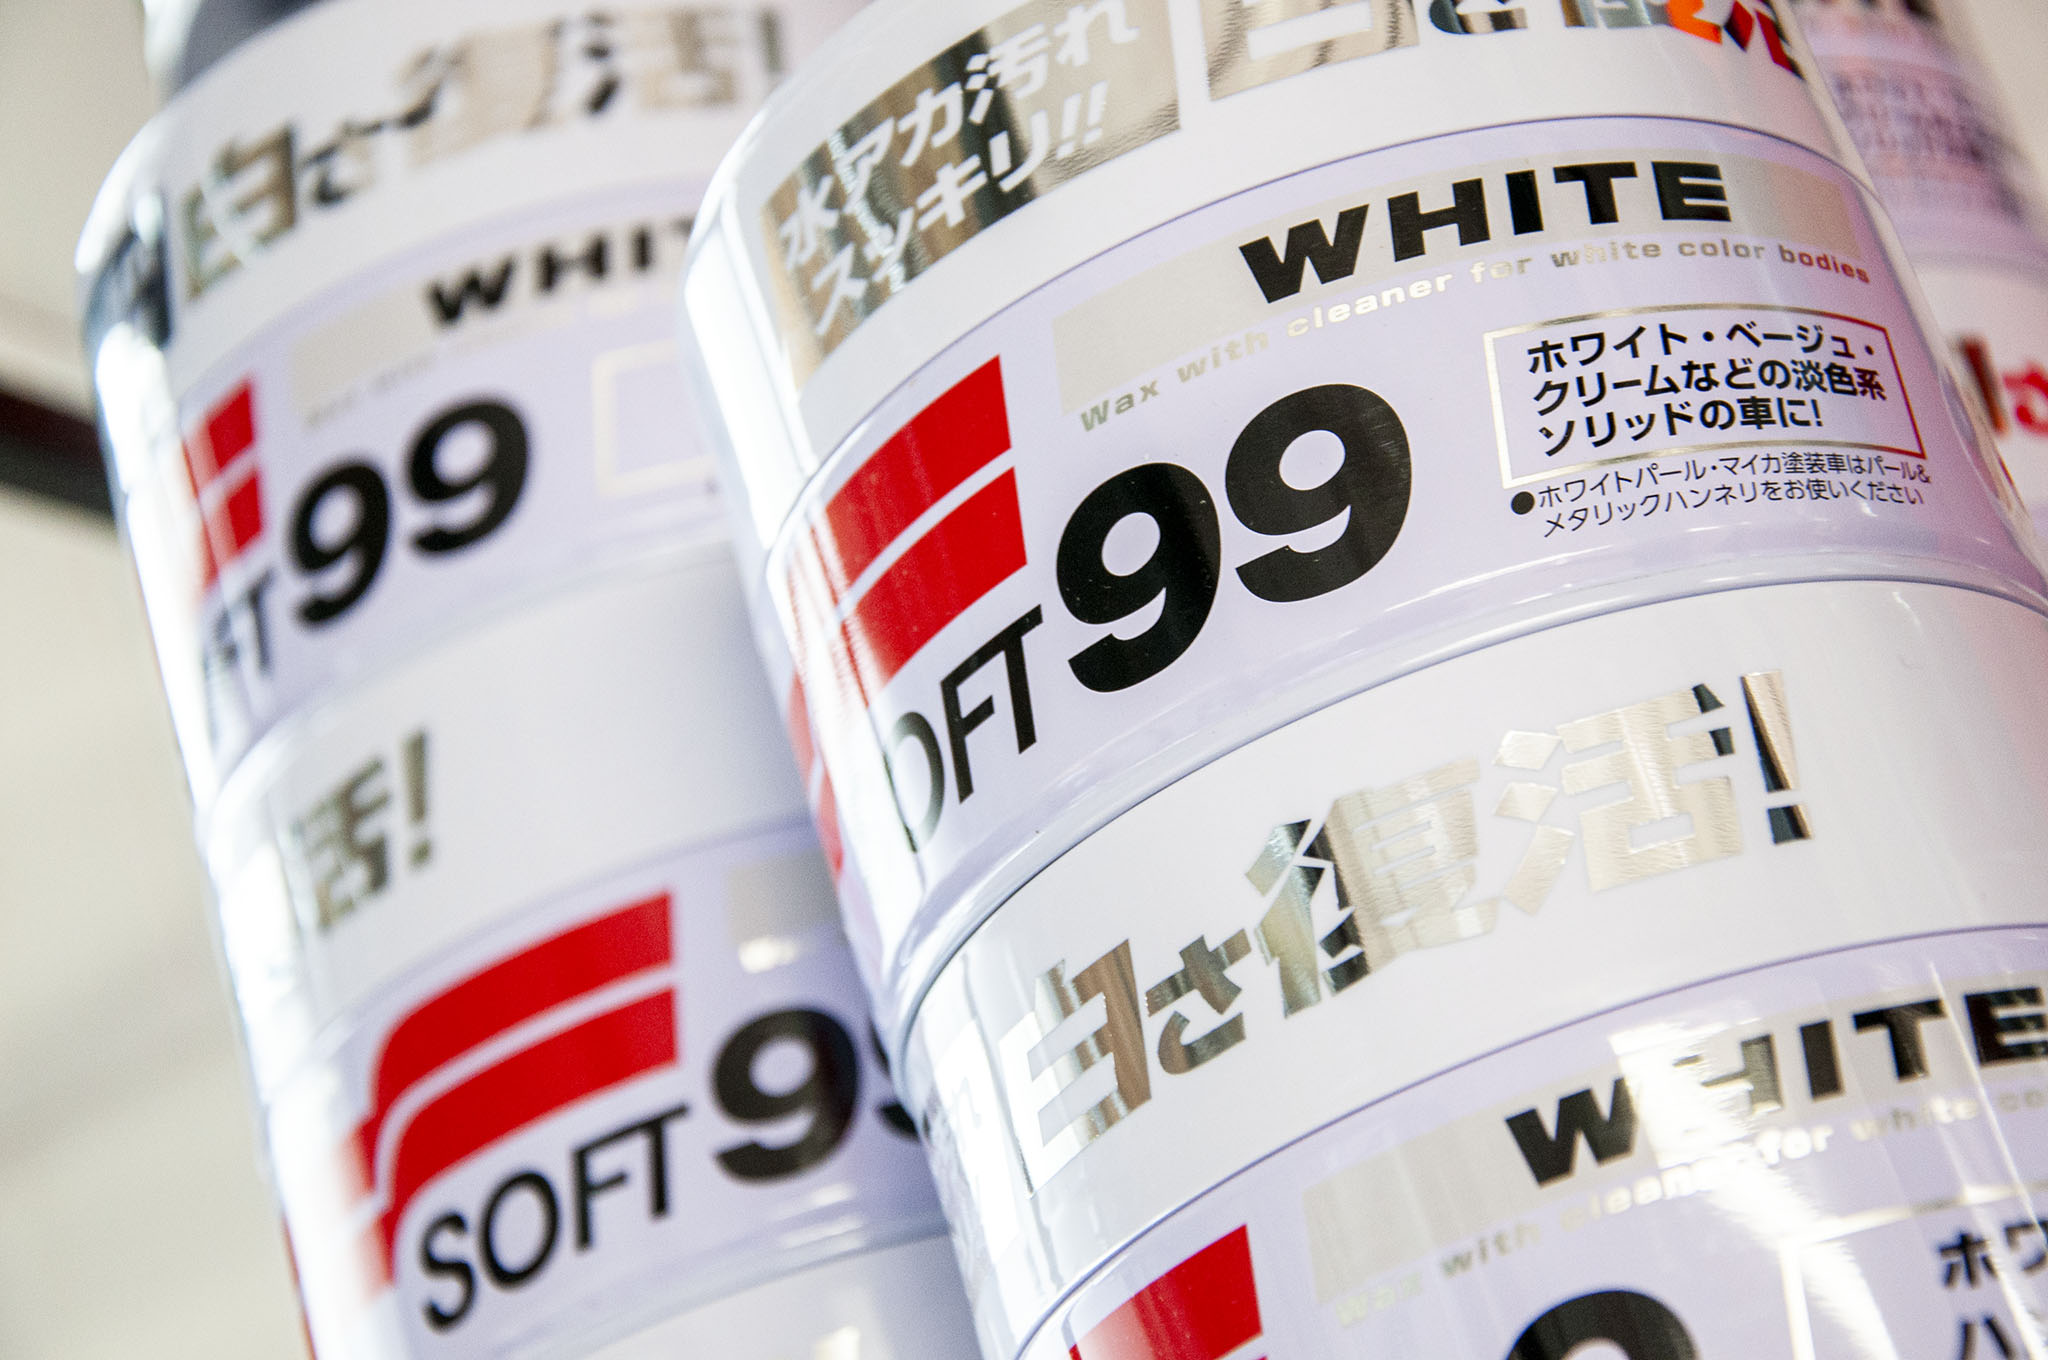 white-soft99-wax-1-1.jpg